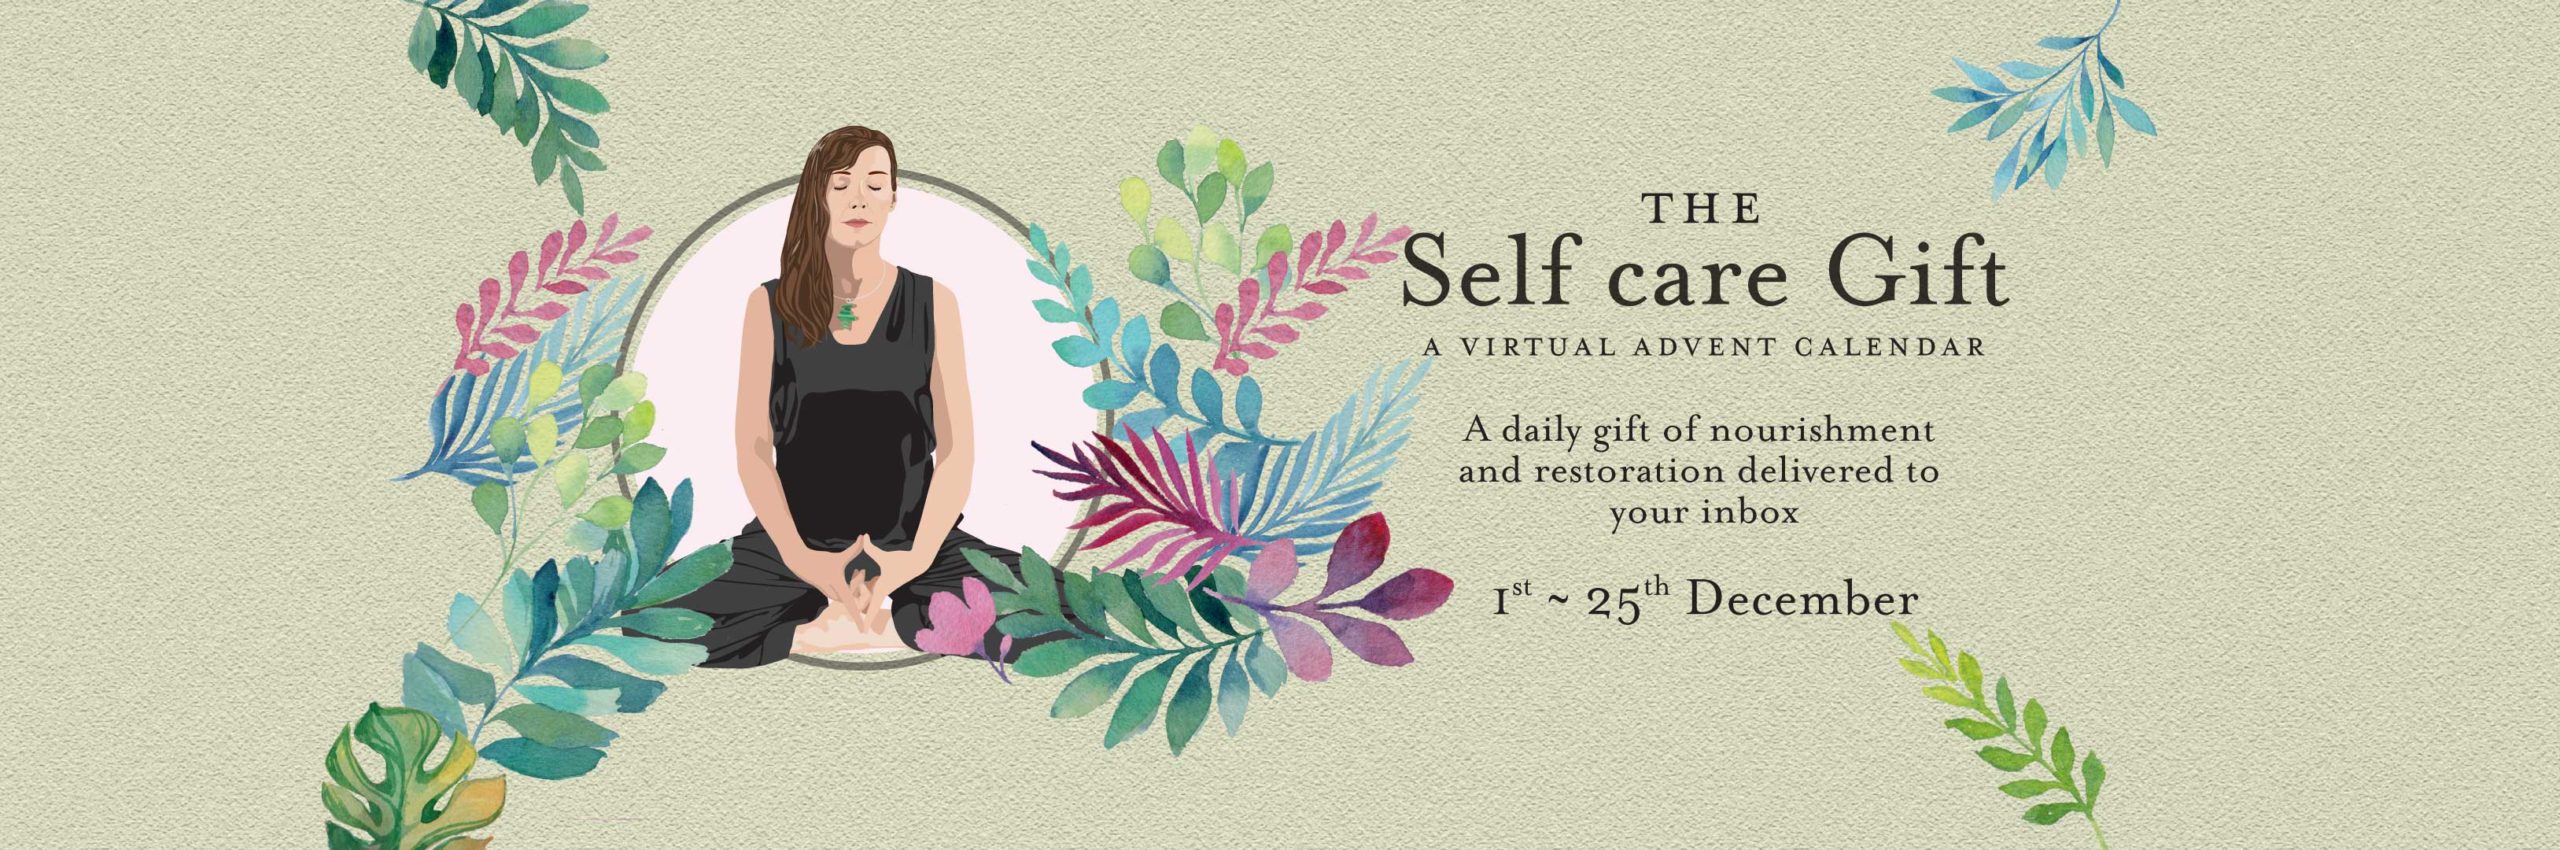 The Self care Gift Virtual Advent Calendar